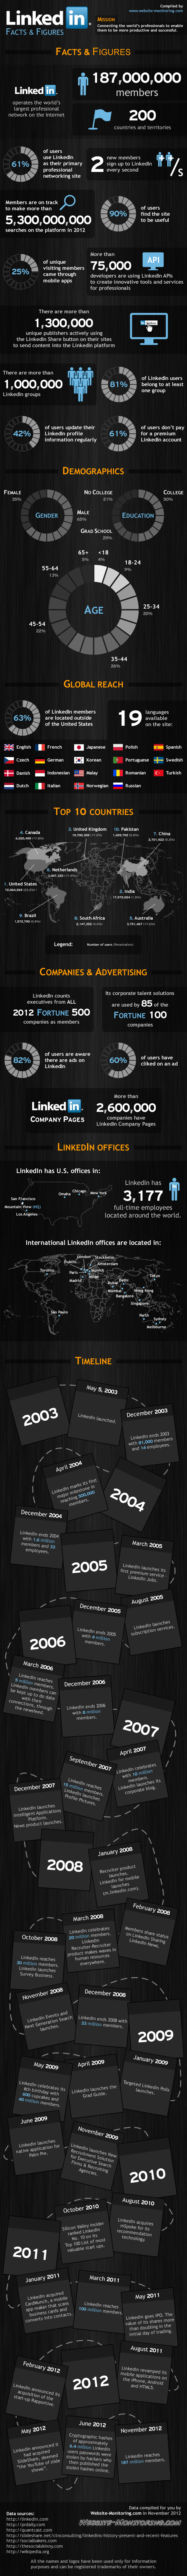 LinkedIn Facts & Figures